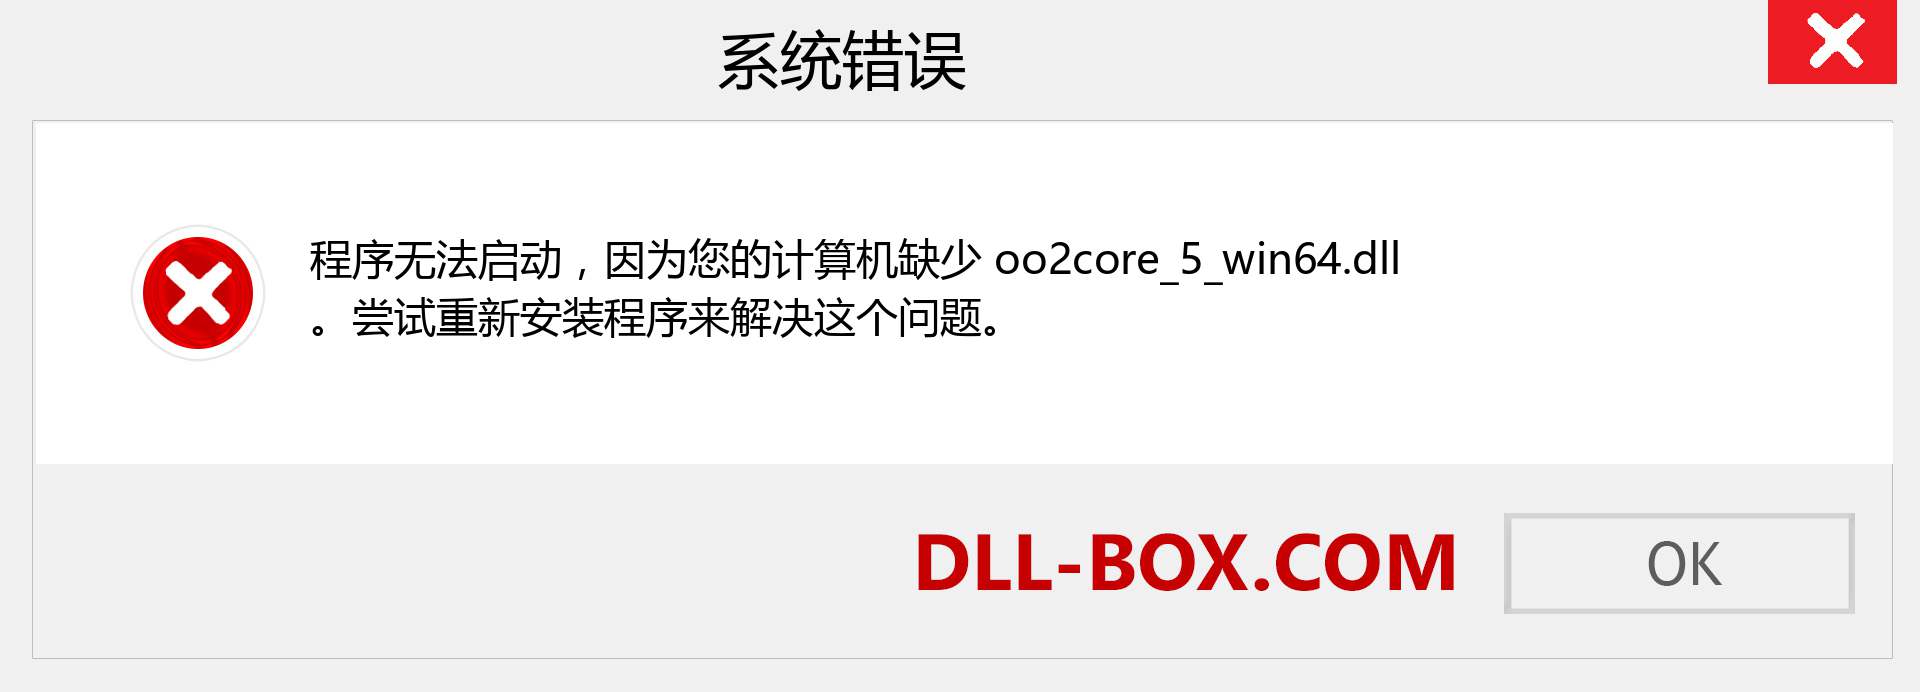 oo2core_5_win64.dll 文件丢失？。 适用于 Windows 7、8、10 的下载 - 修复 Windows、照片、图像上的 oo2core_5_win64 dll 丢失错误